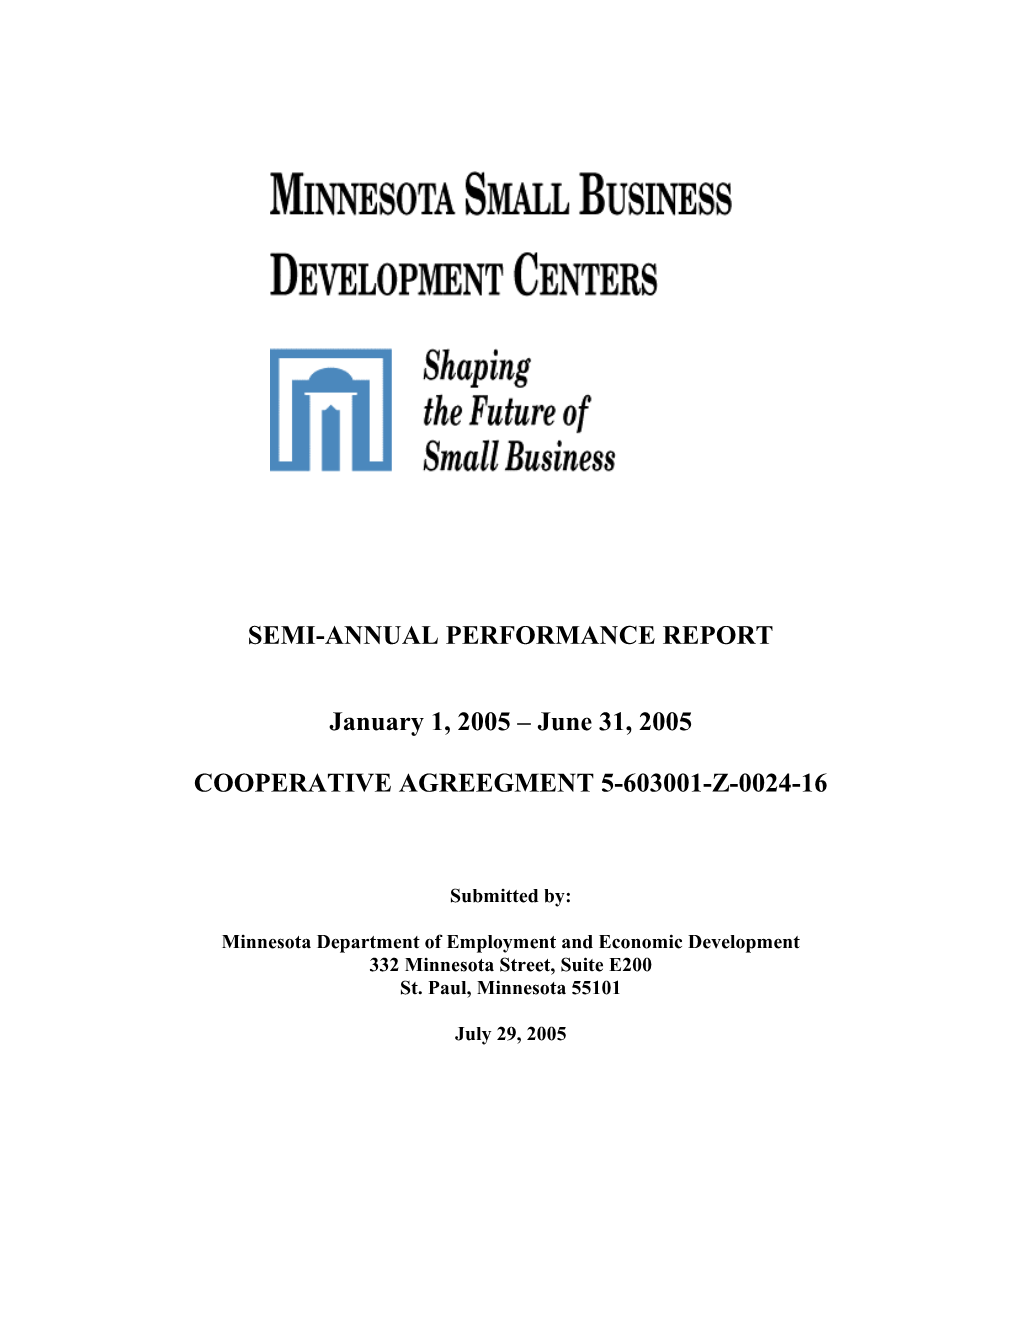 Semi-Annual Performance Report